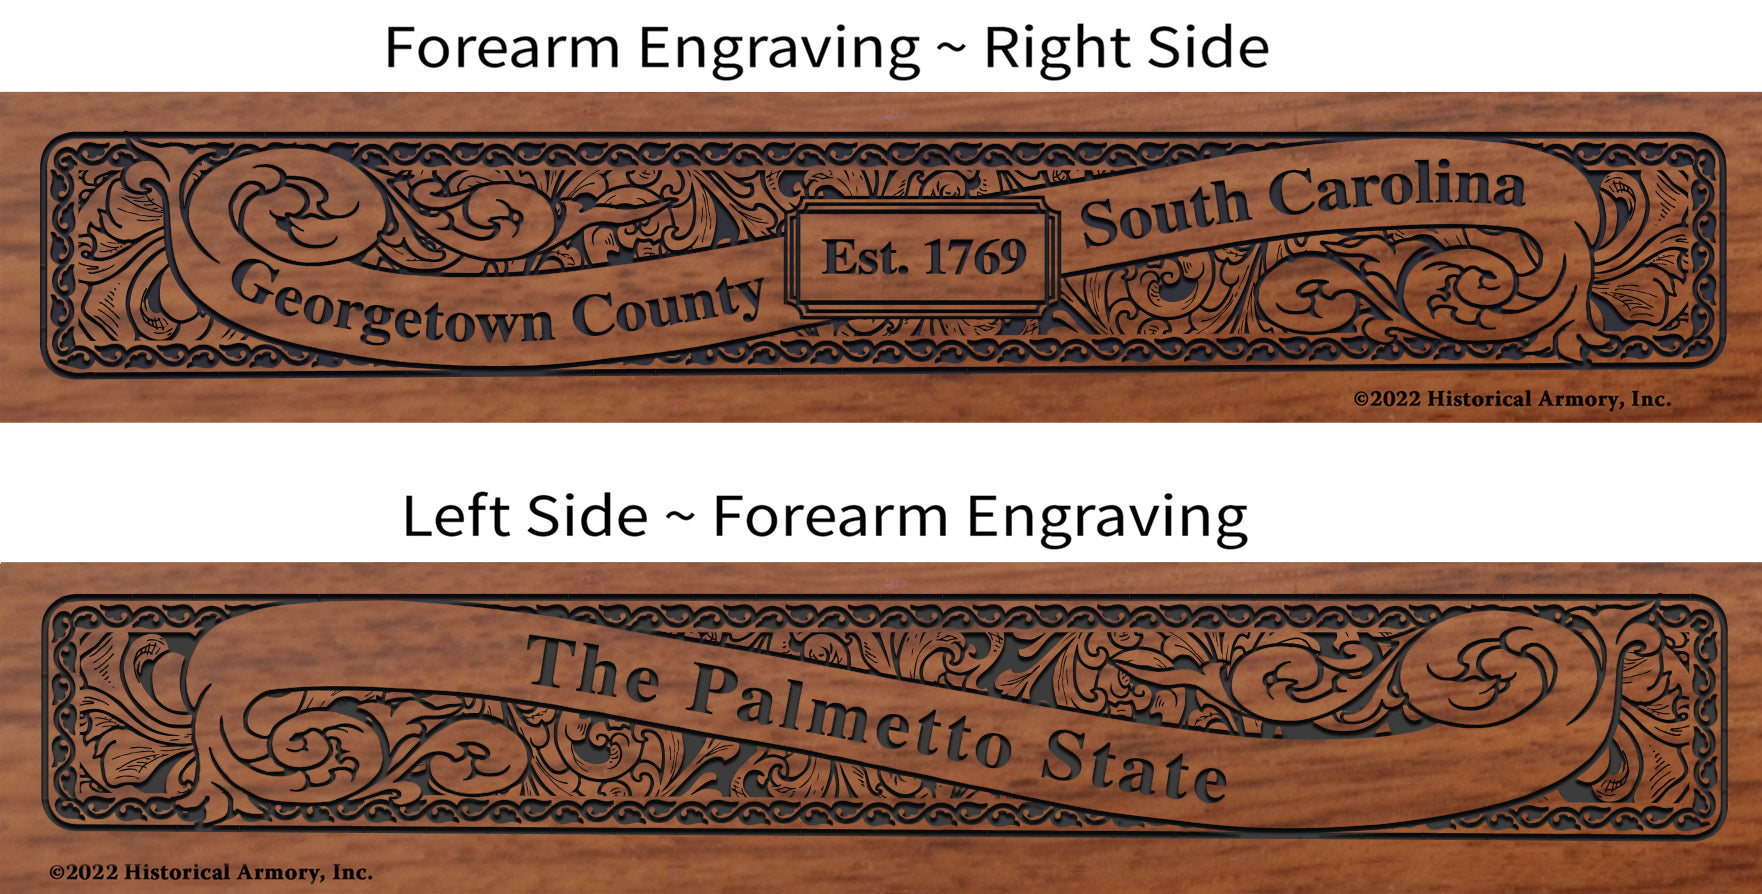 Georgetown County South Carolina Engraved Rifle Forearm